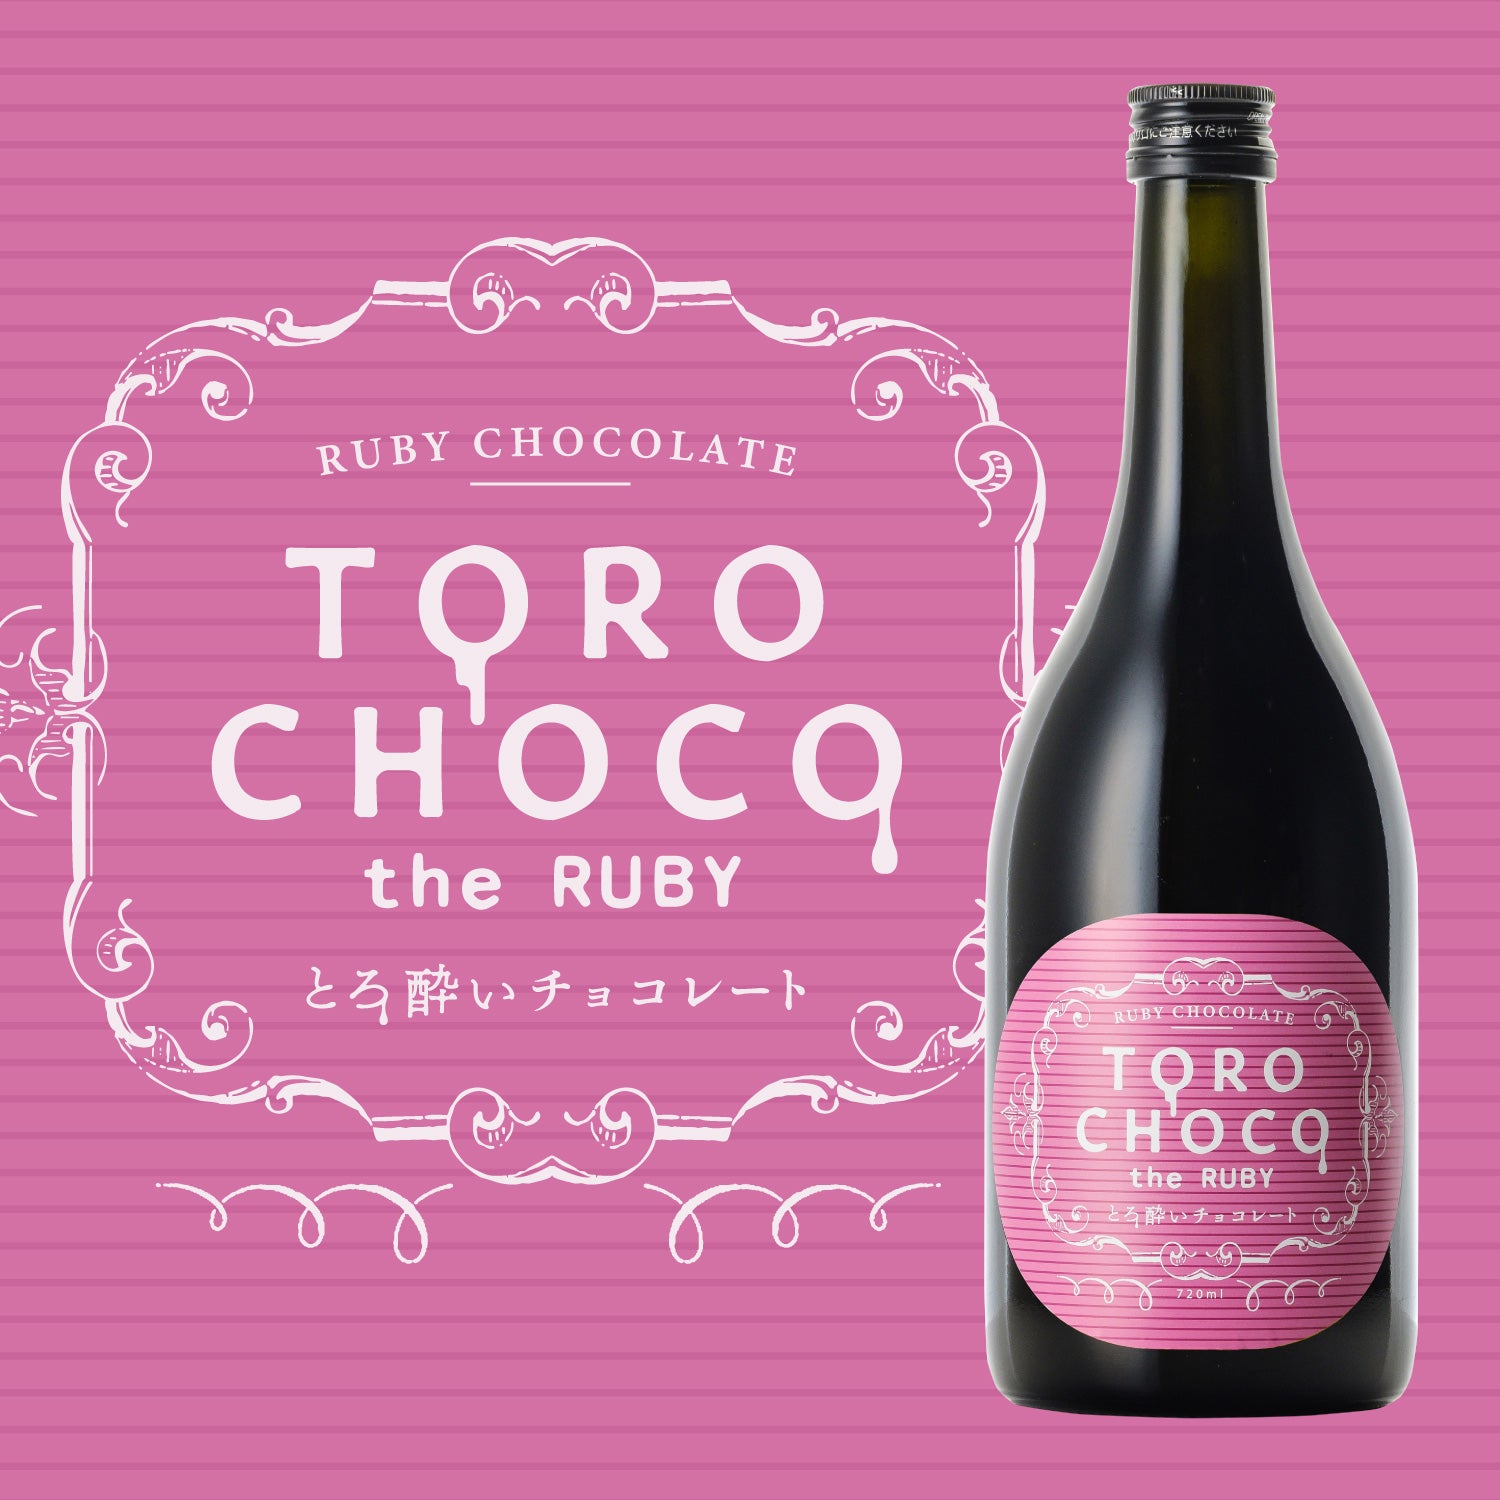 TOROCHOCO the RUBY